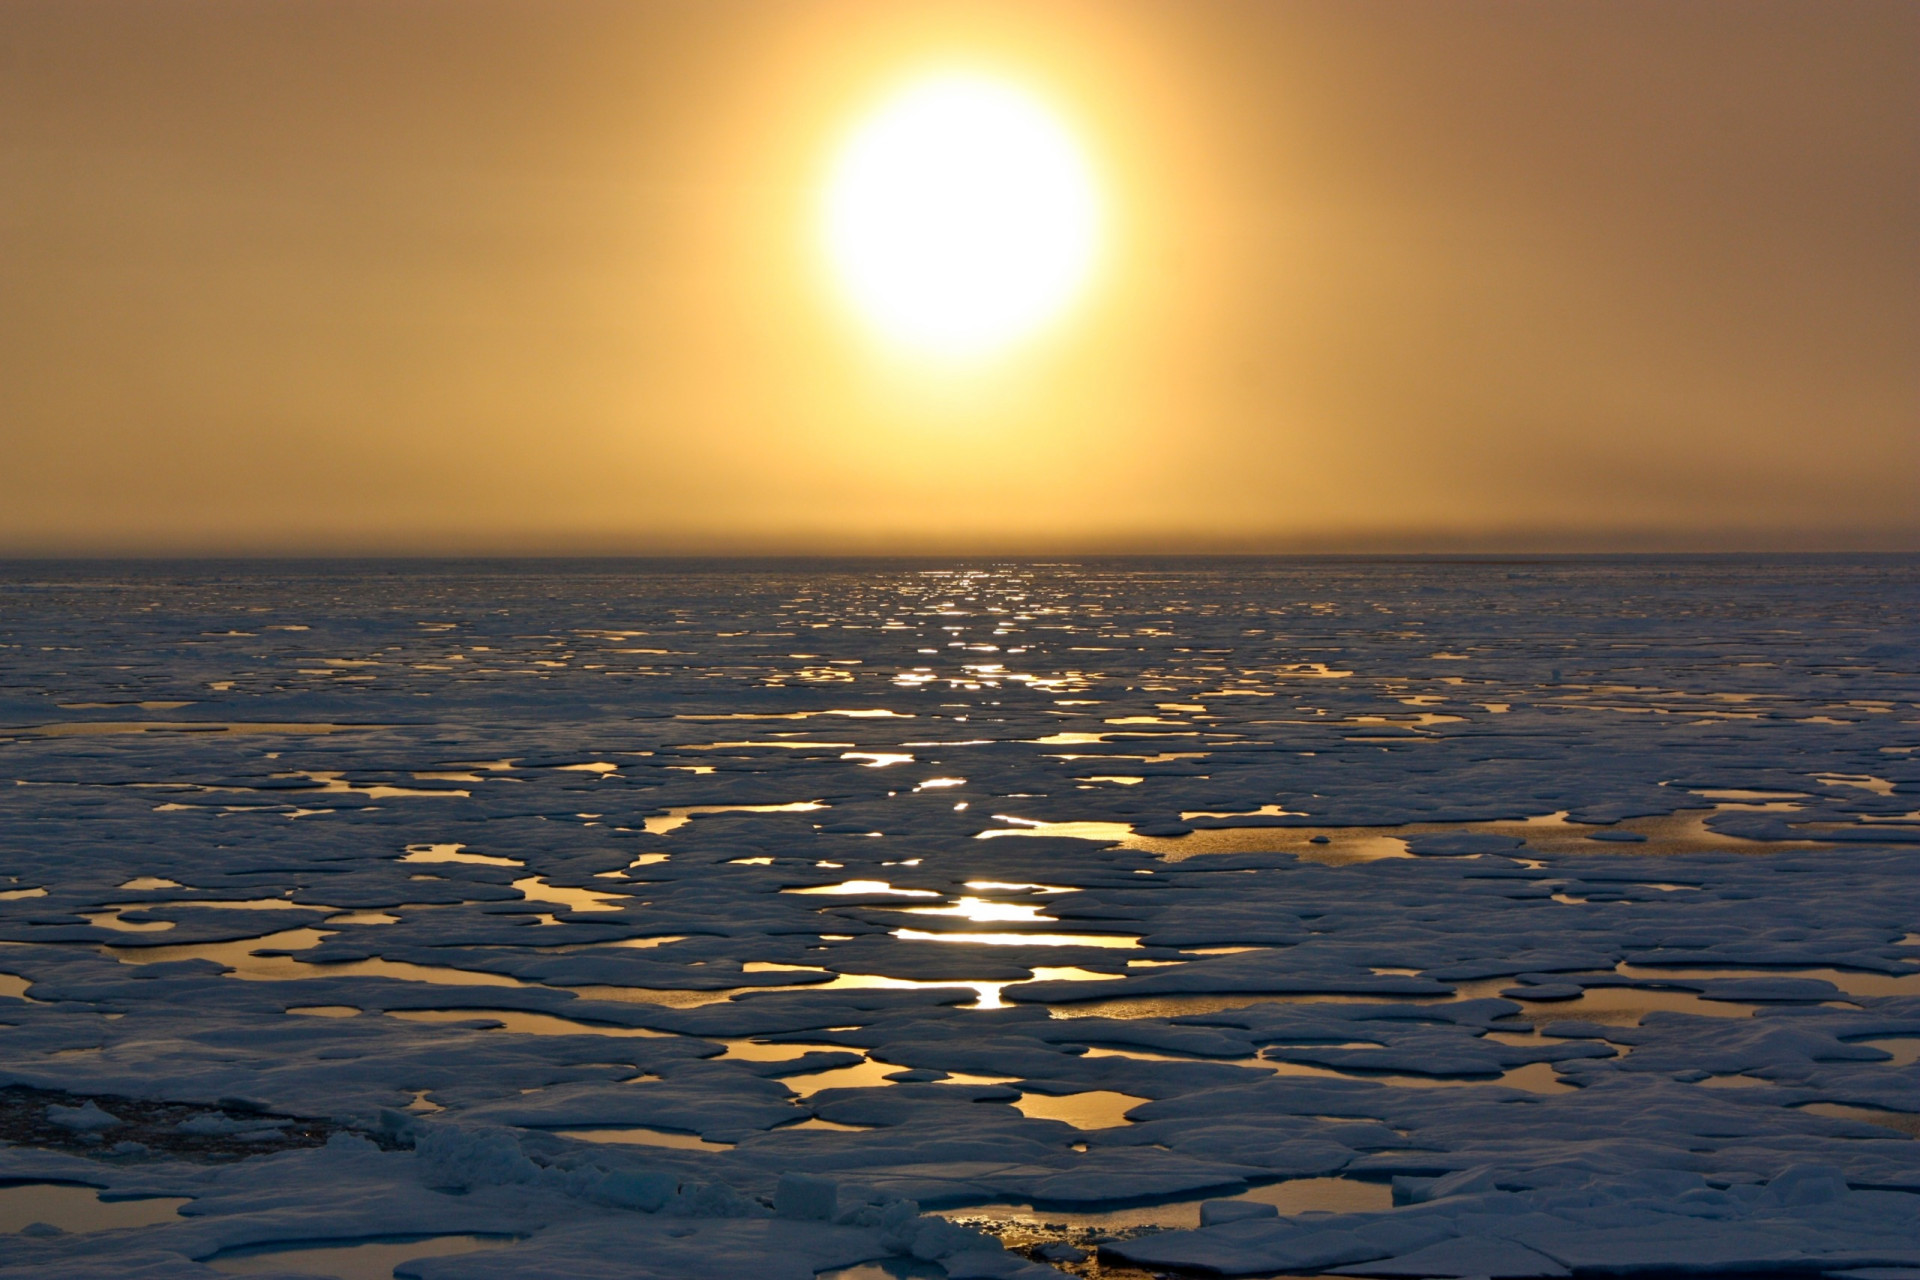 arctic climate change